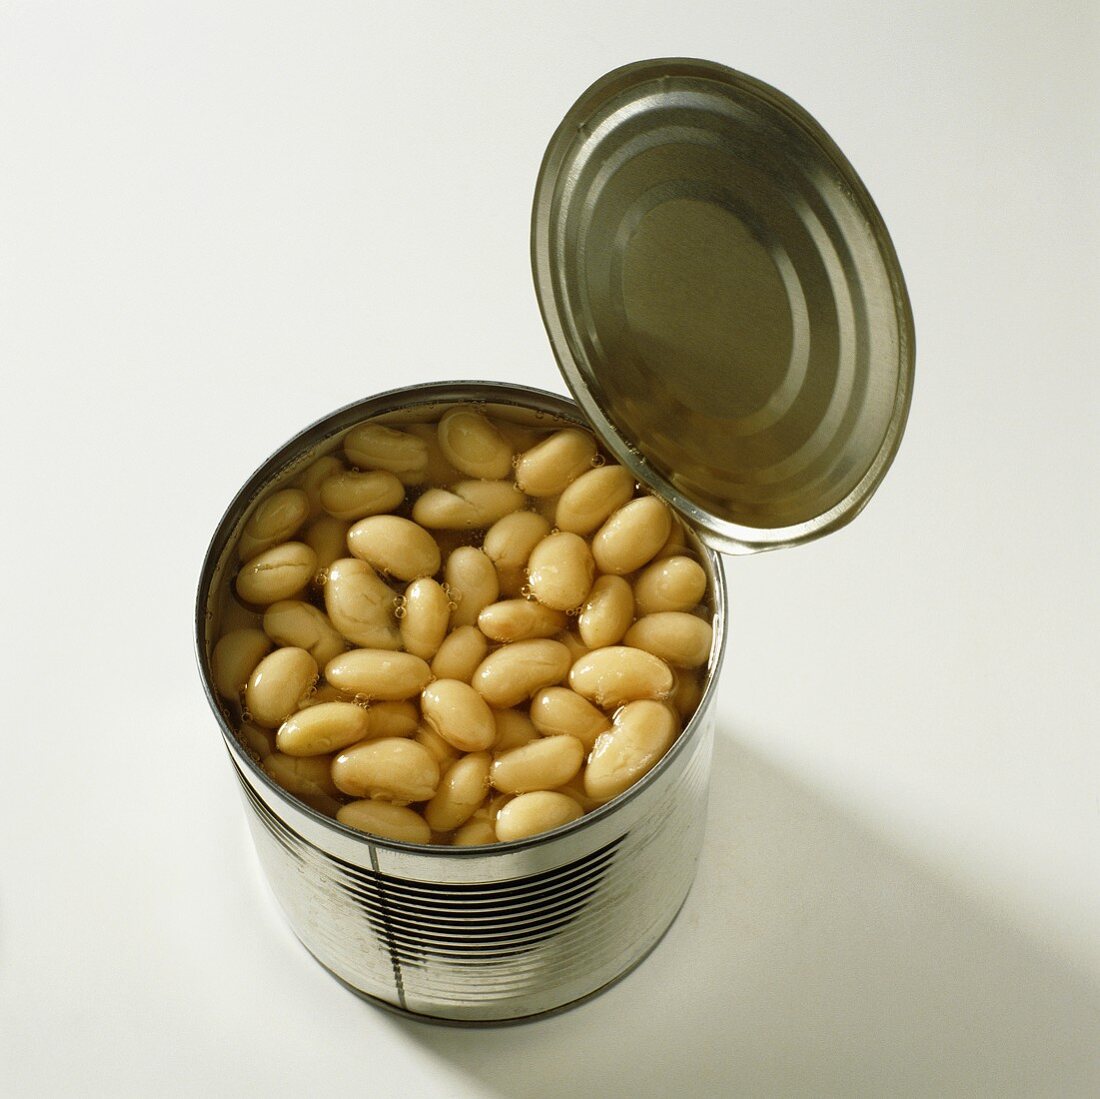 White beans in a tin